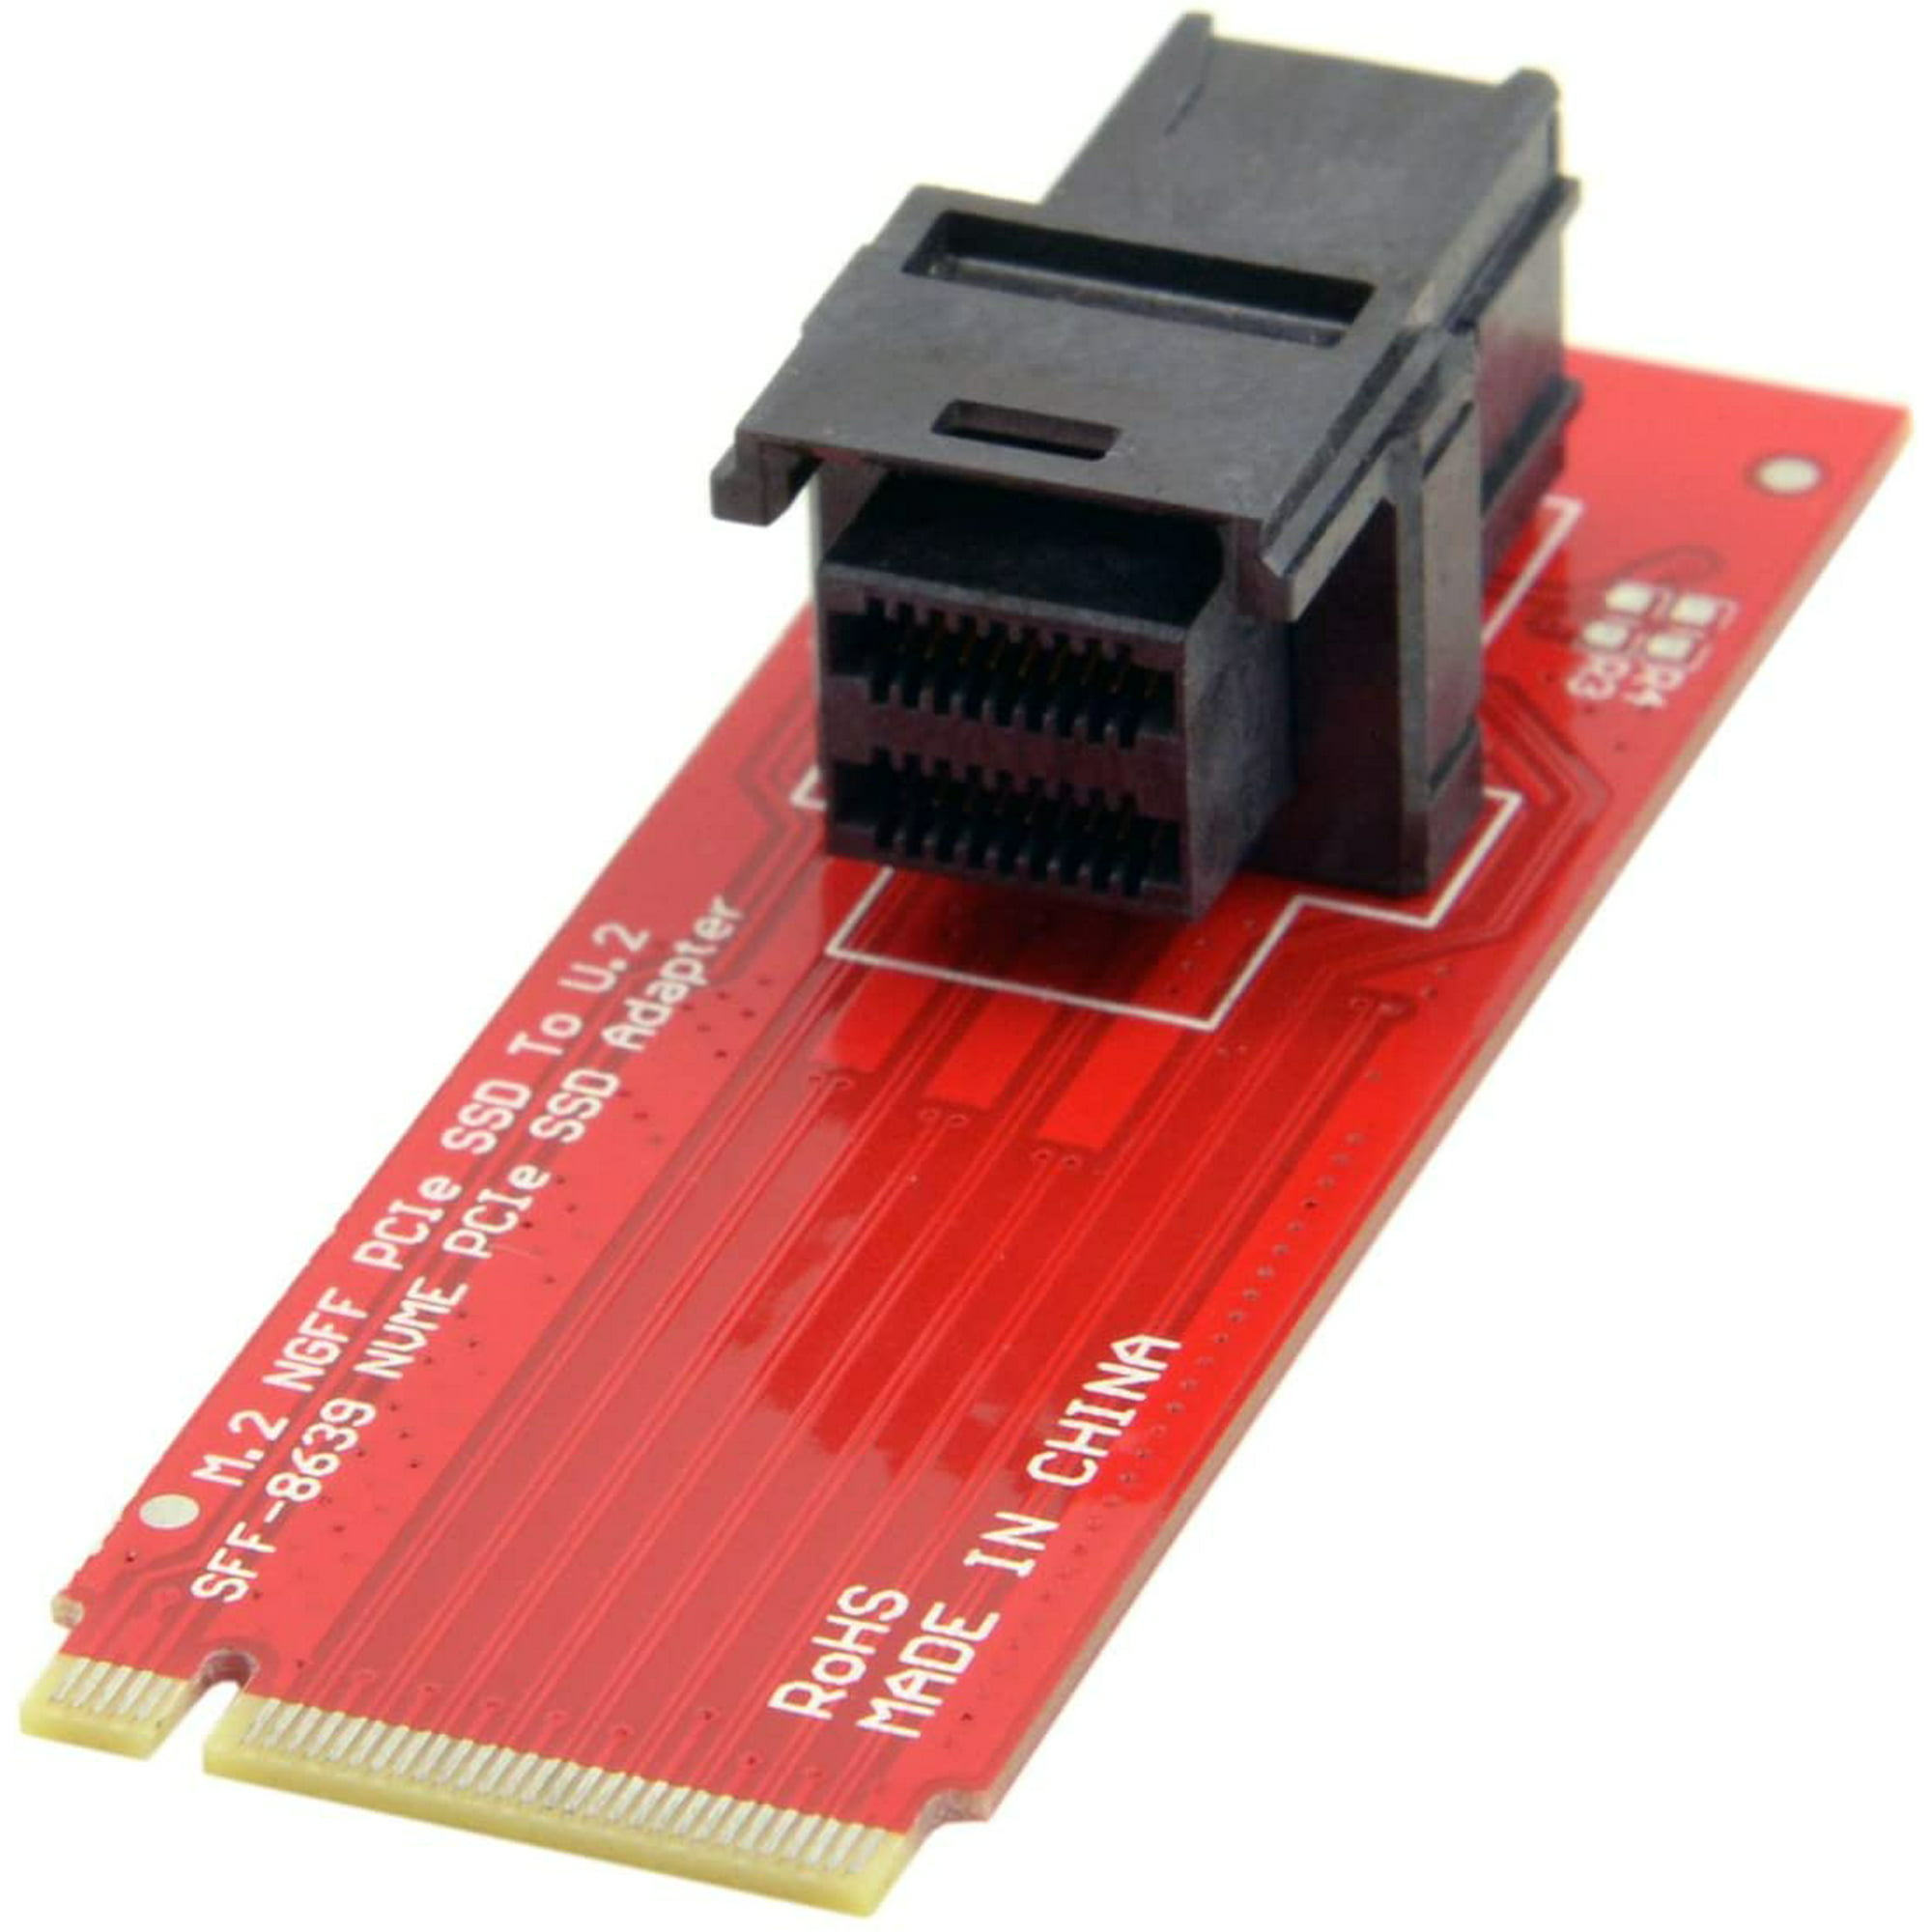 SFF-8643 NVMe SSD Upward miniSAS 36-Pin Connector for U.2 Ableconn M2-U2131U M.2 Module with Mini-SAS HD - Support Intel 750 2.5-inch U.2 SFF SSD SFF-8639 